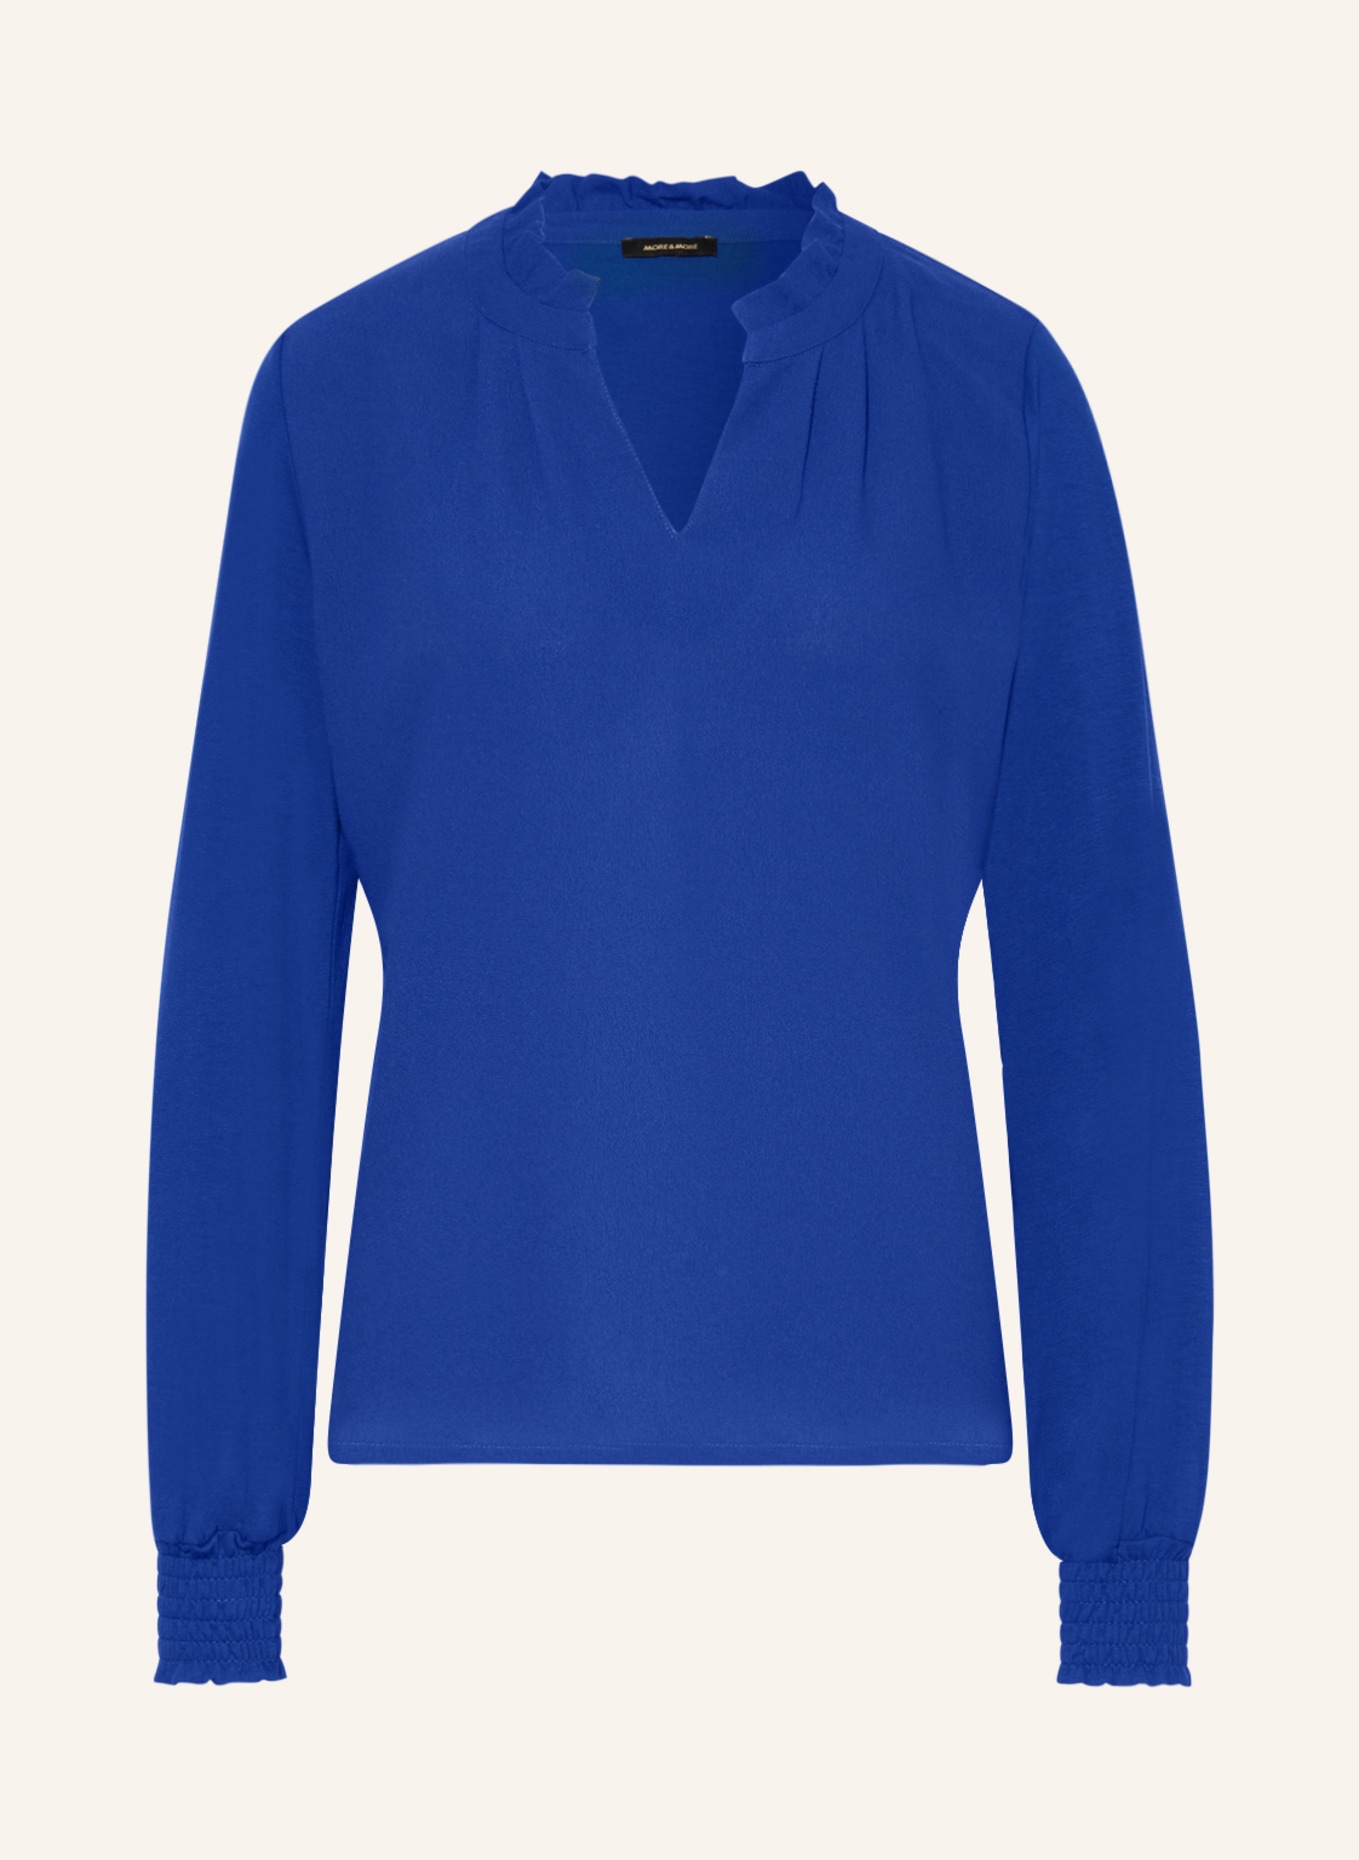 MORE & MORE Blusenshirt, Farbe: BLAU (Bild 1)